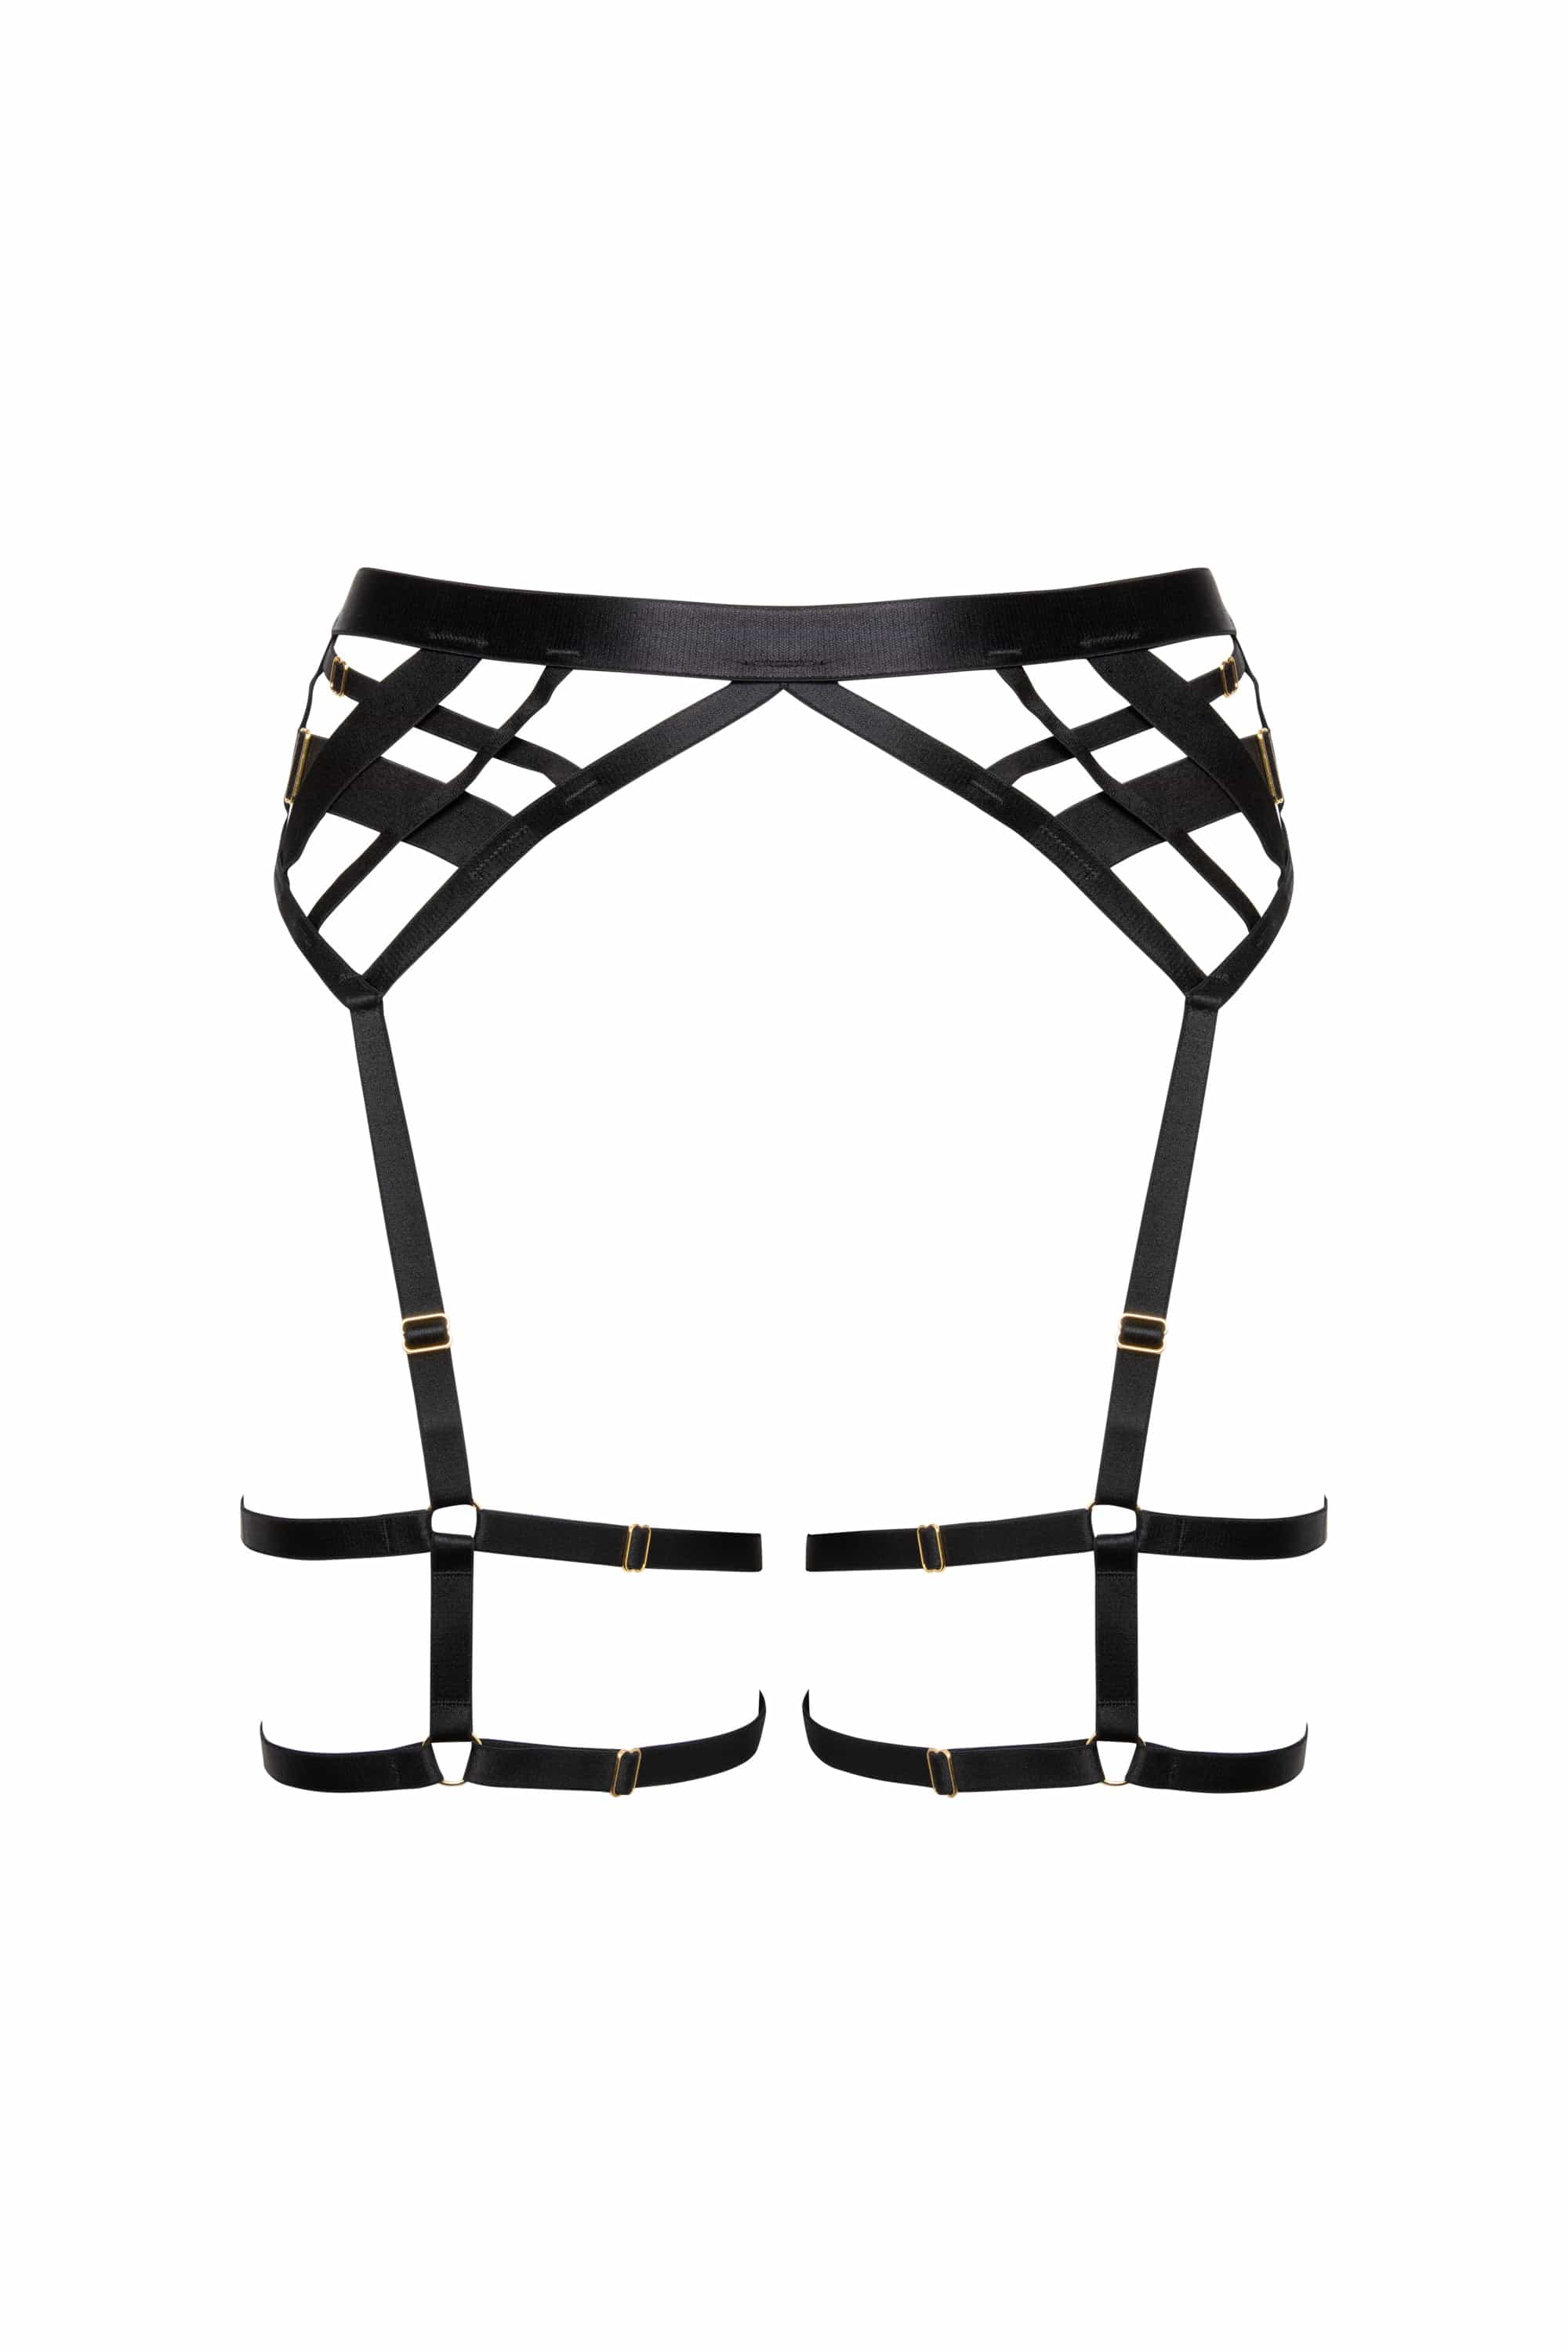 Chantal Black Open Elastic Suspender with Leg Harness